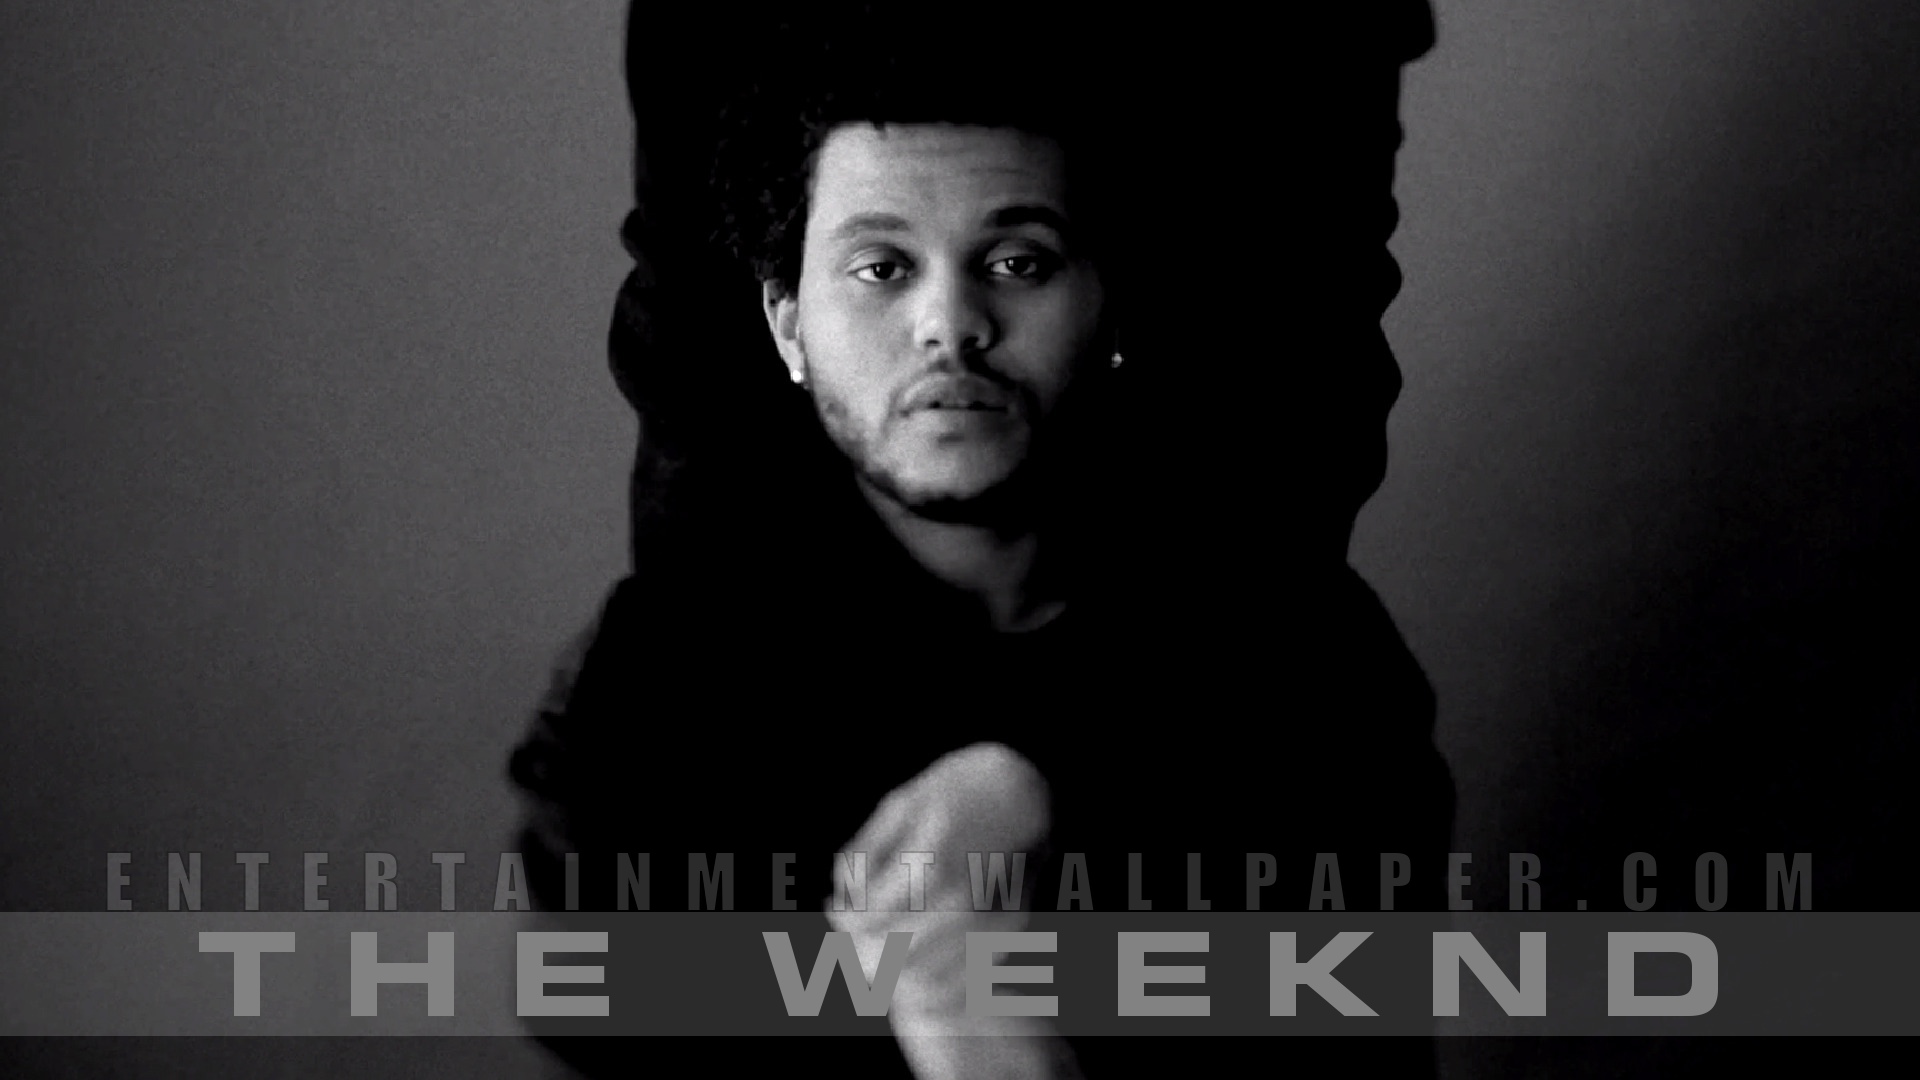 The Weeknd Name Rap Wallpaper